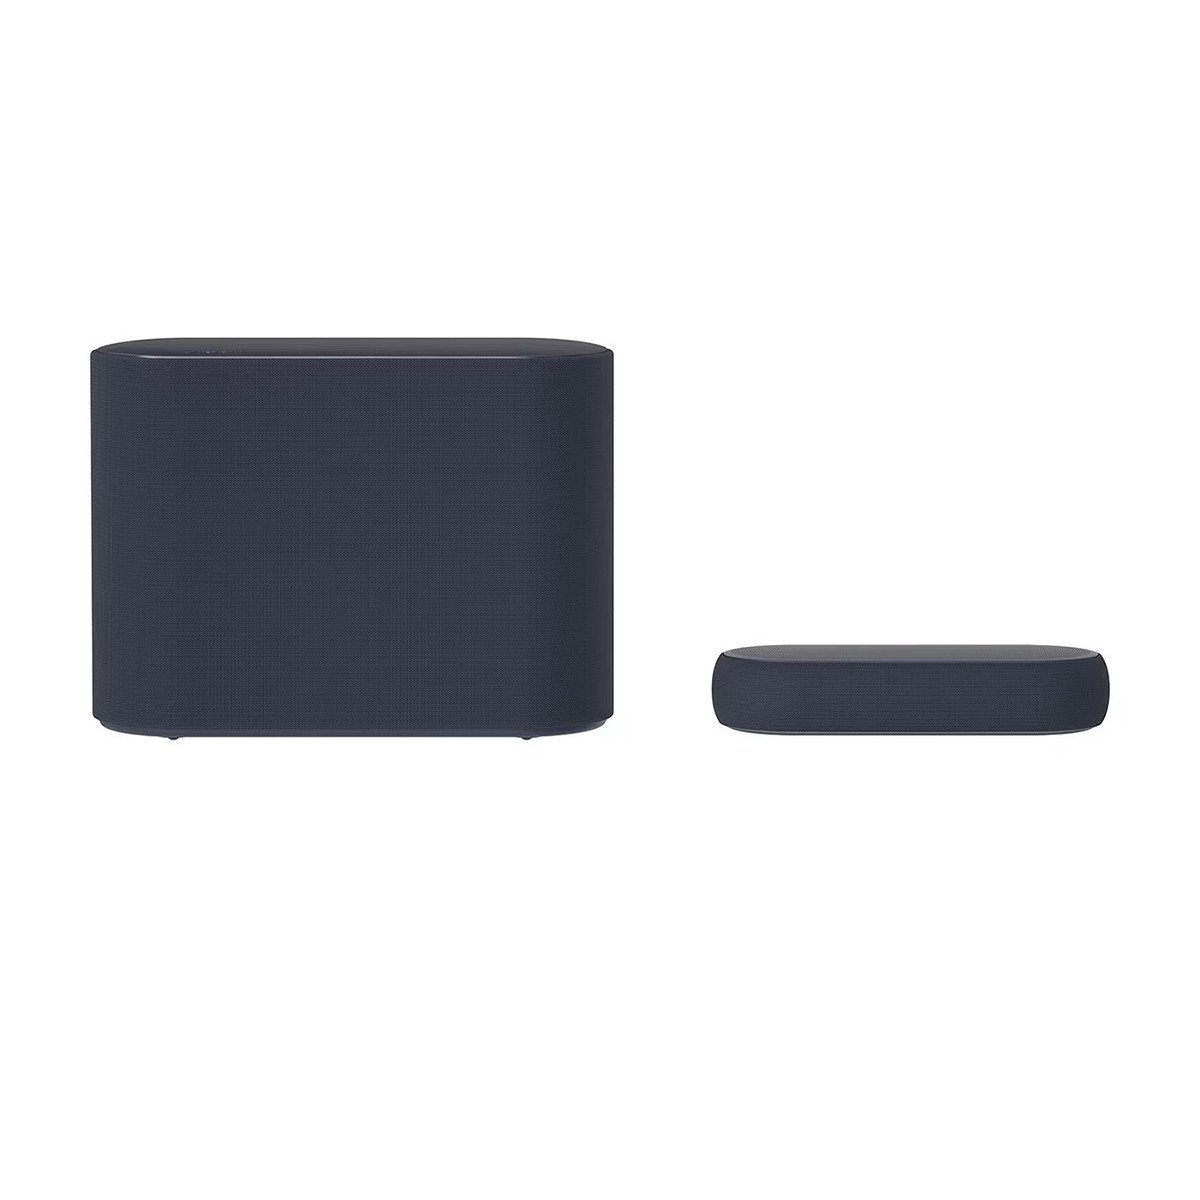 LG SOUND BAR 3.1.2 CHANNEL DOLBY DIGITAL COMPACT DESIGN WITH SUBWOOFER BLACK QP5